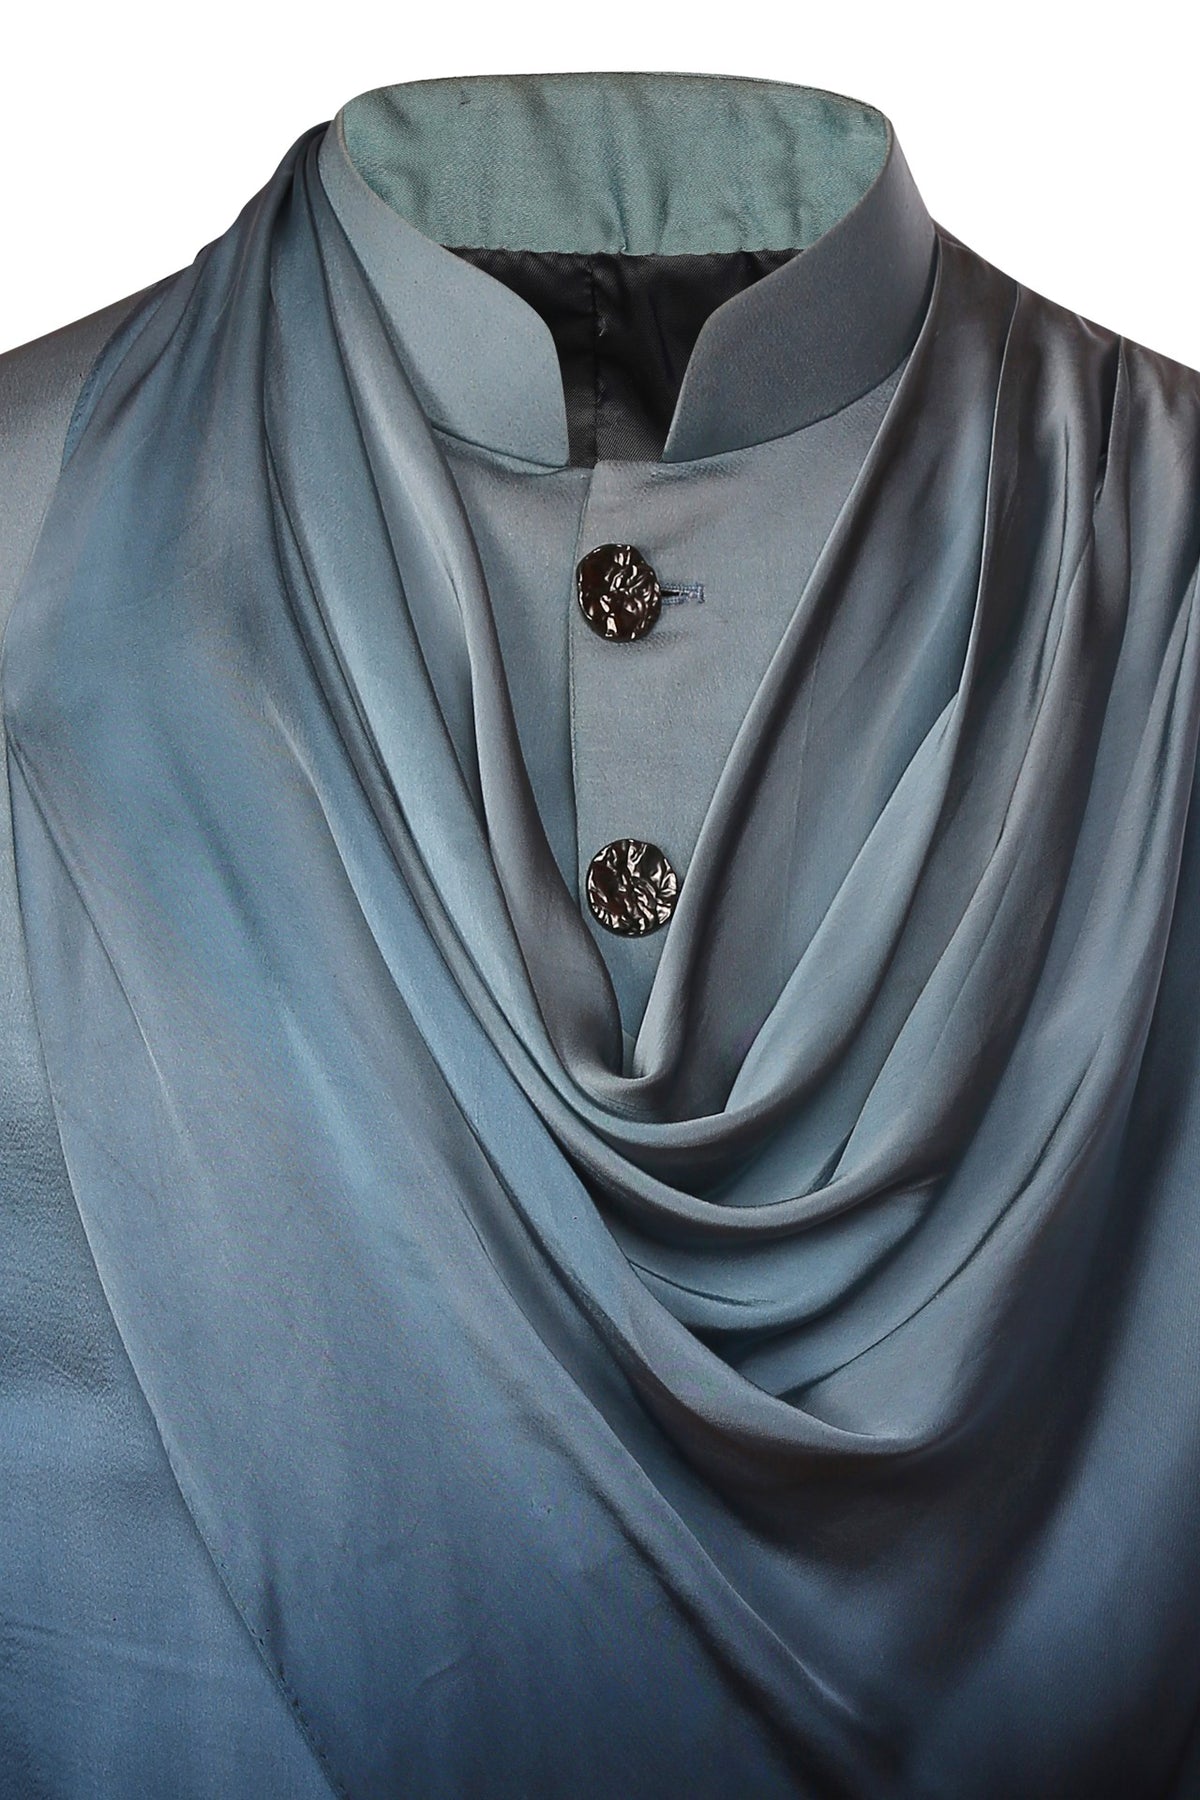 Blue monochromatic ombré bandhgala in satin silk